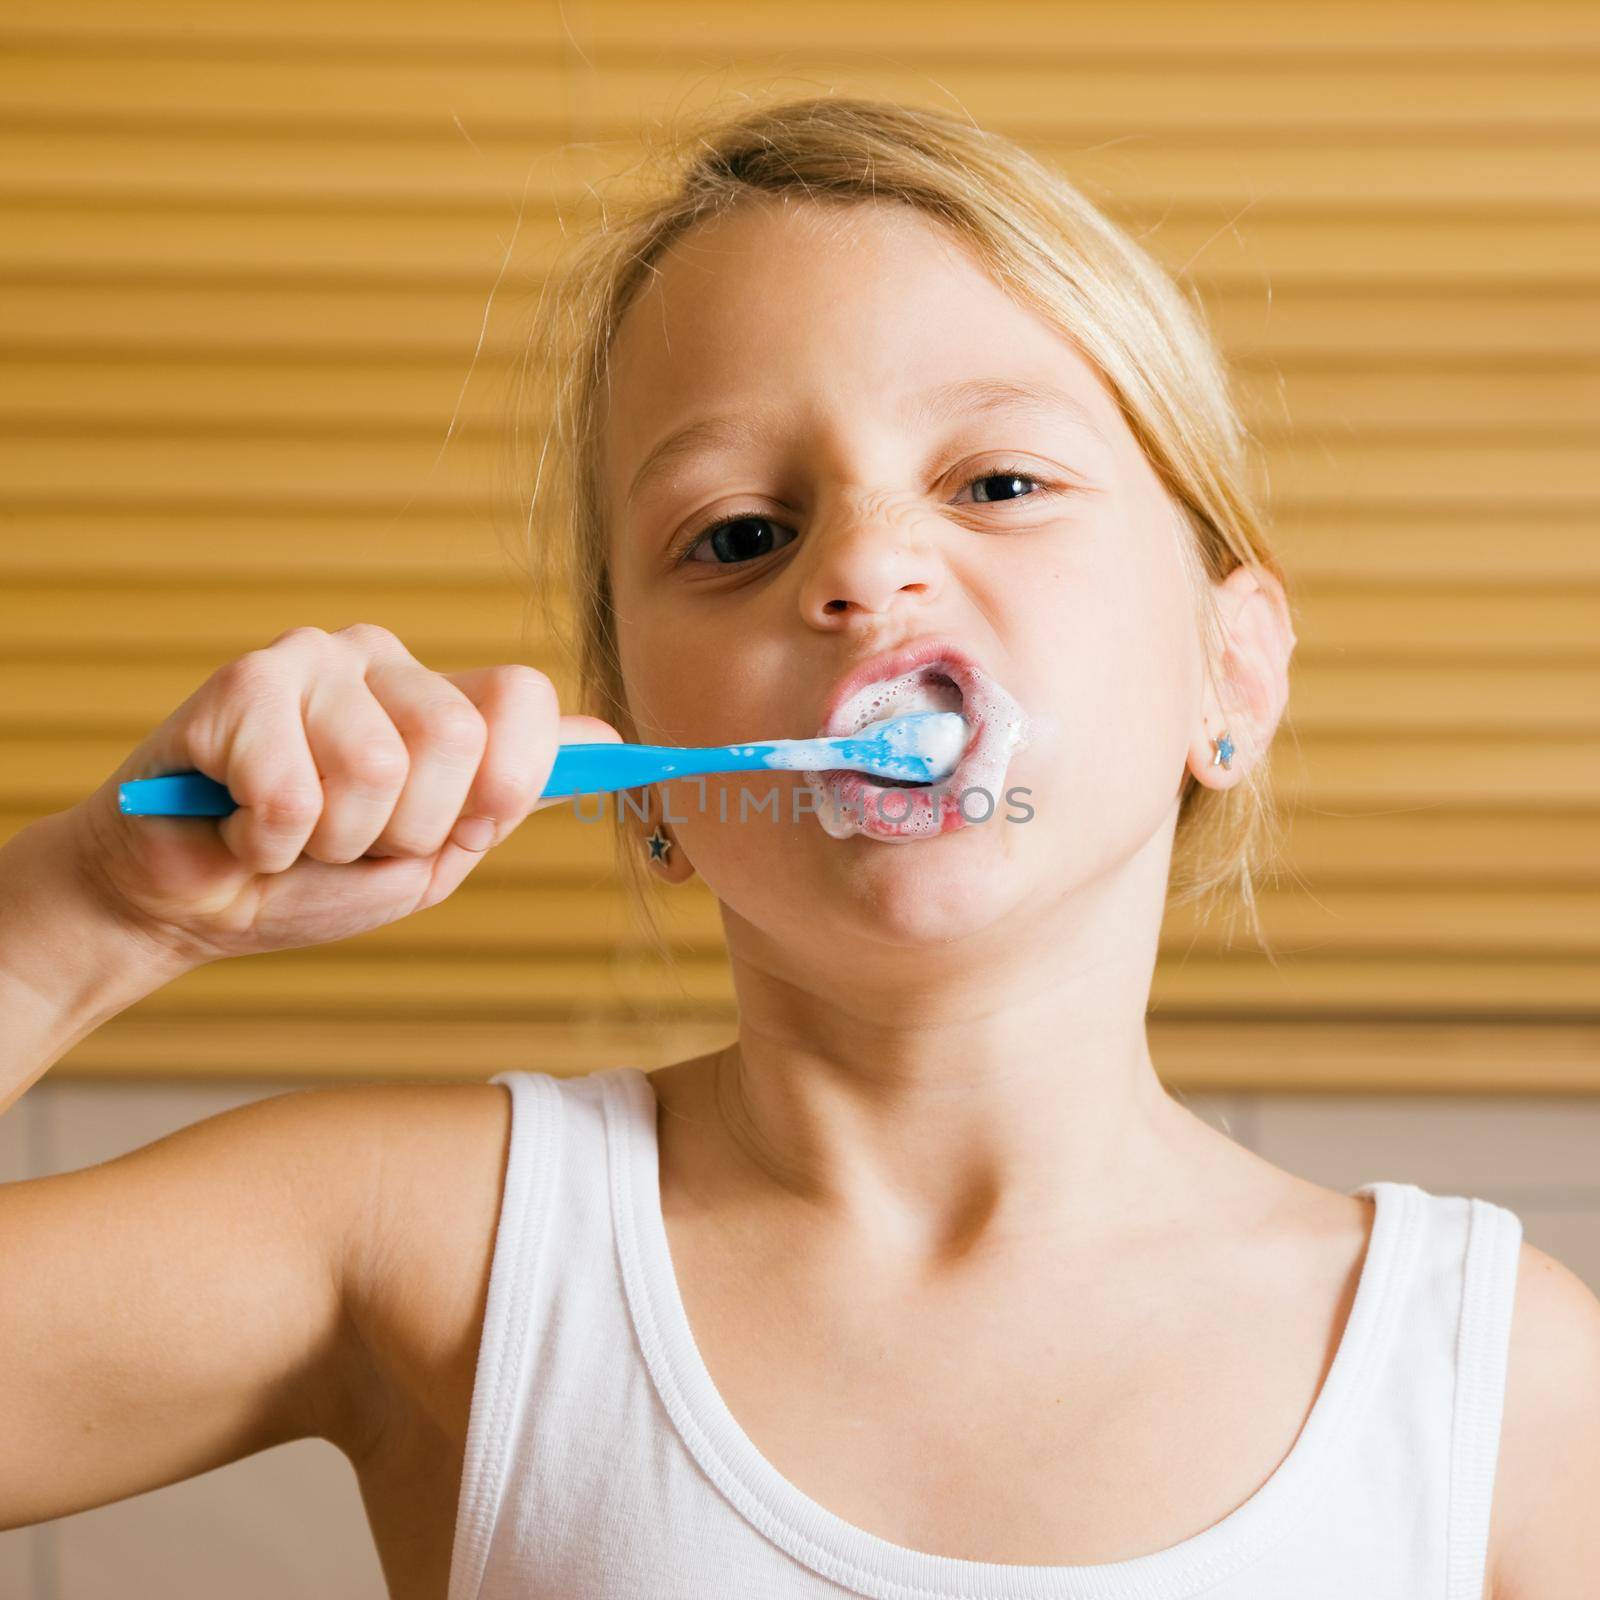 Child brushing teeth by Kzenon